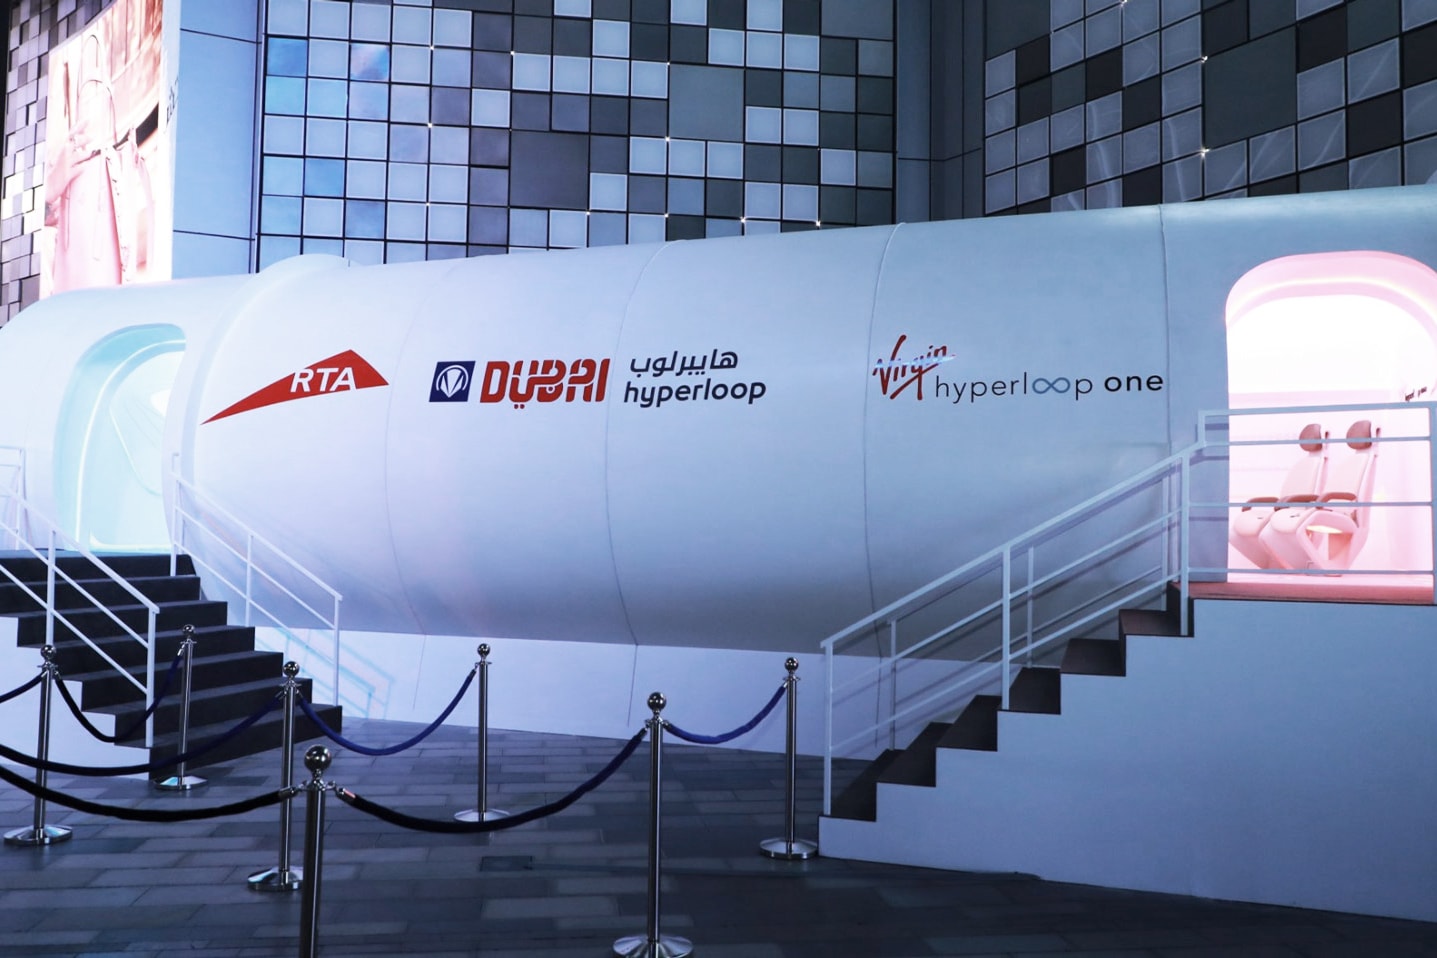 Virgin First Prototype Hyperloop One Passenger Pod Richard Branson Elon Musk Dubai Abu Dhabi